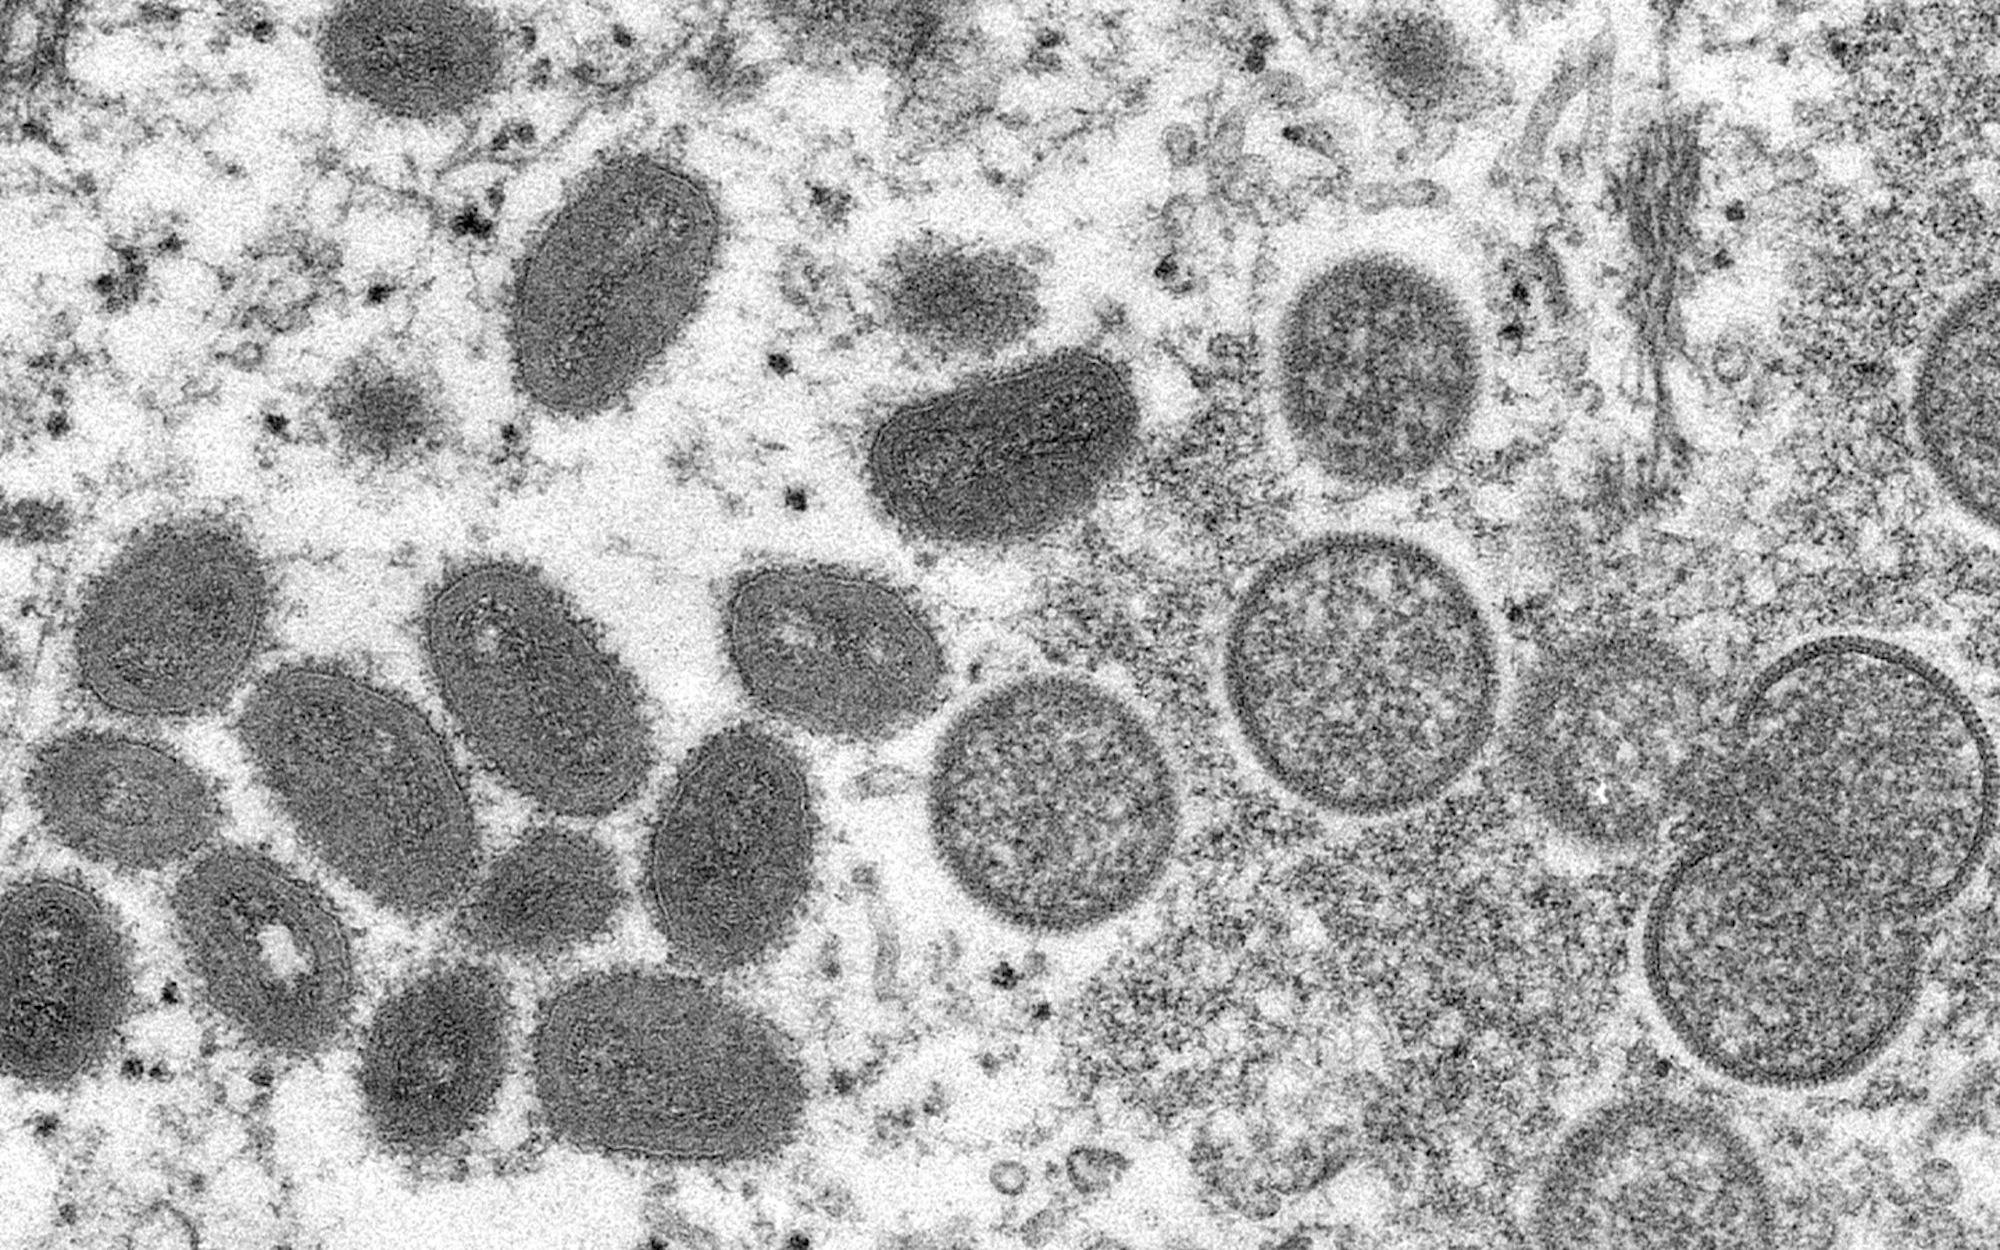 Residents warned again about virulent monkeypox disease